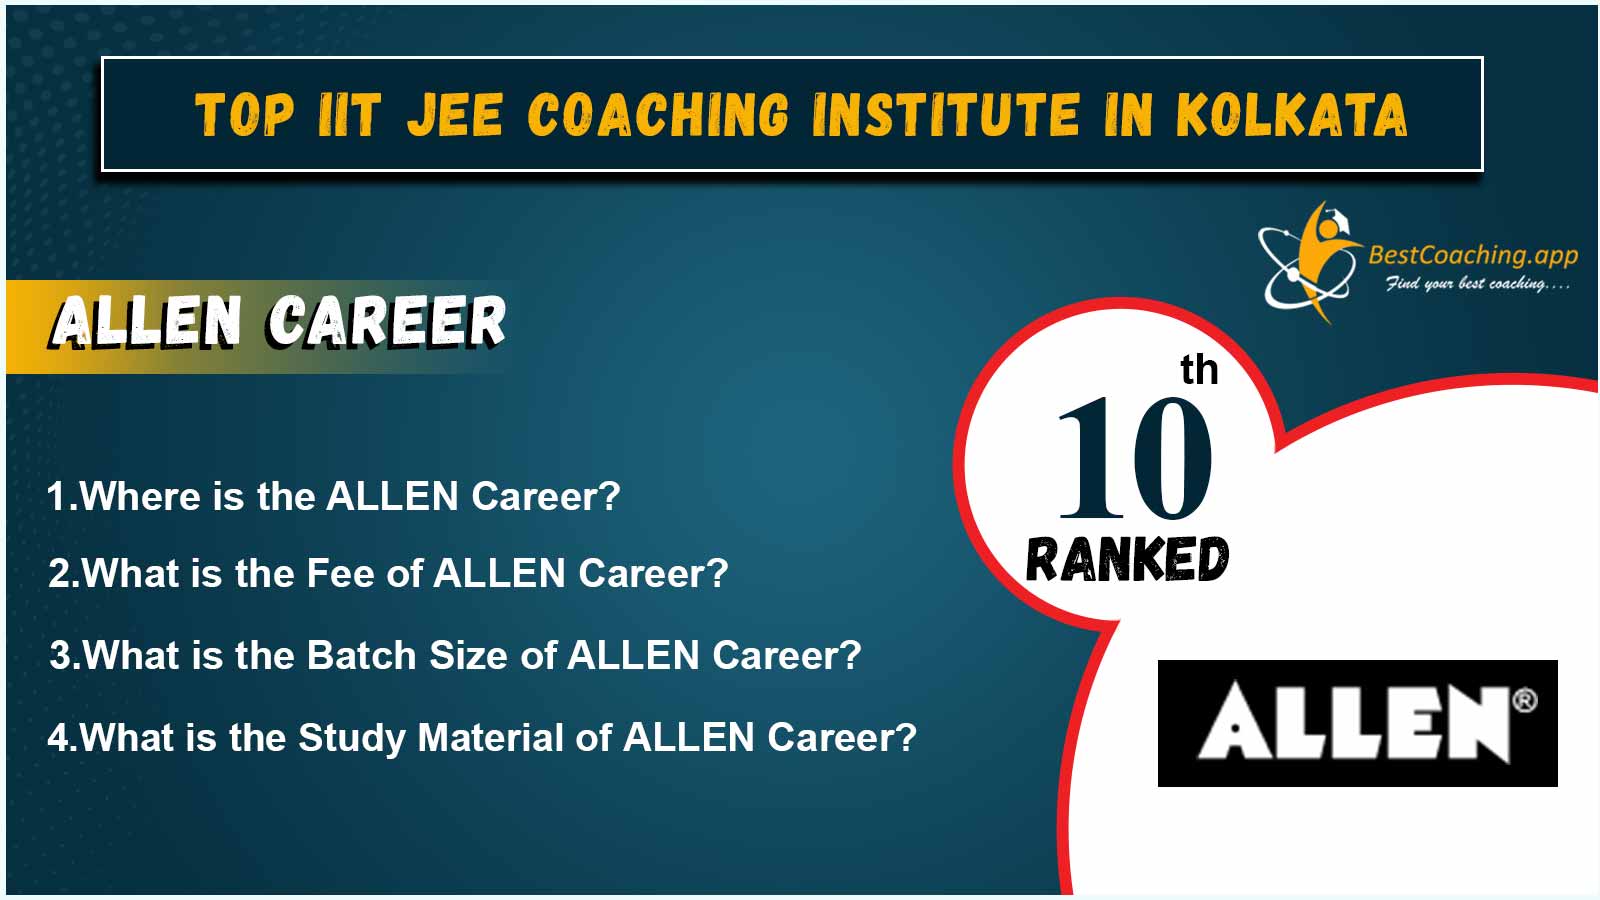 Top IIT JEE Coaching Institute In Kolkata